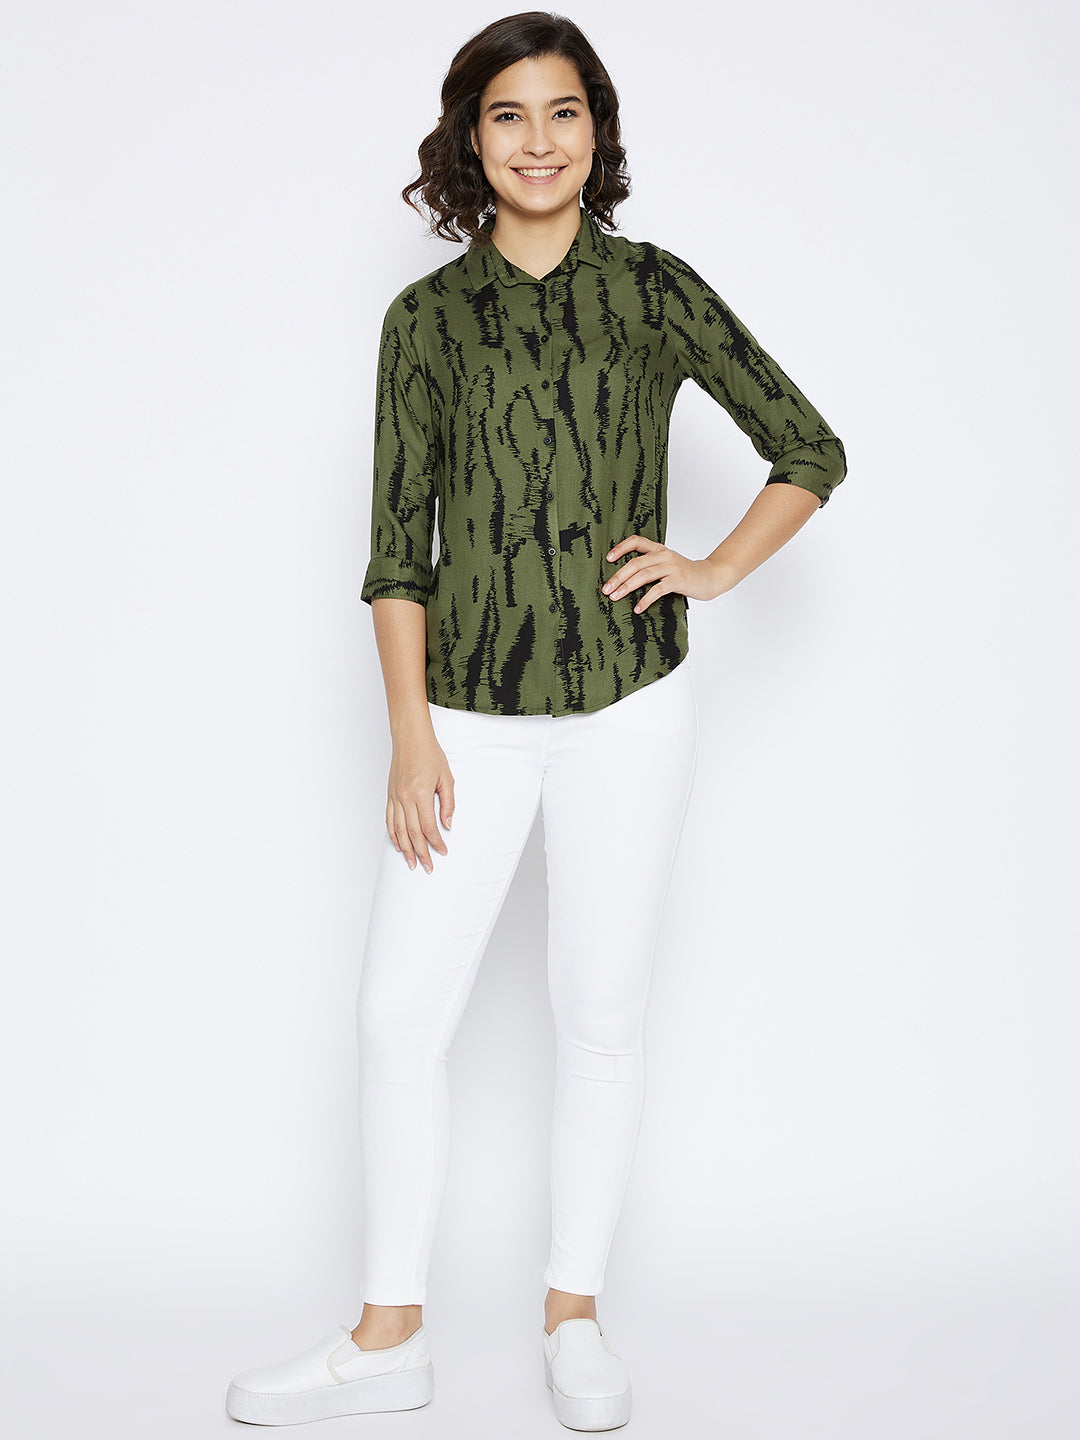 Green Printed Slim Fit shirt - Women Shirts